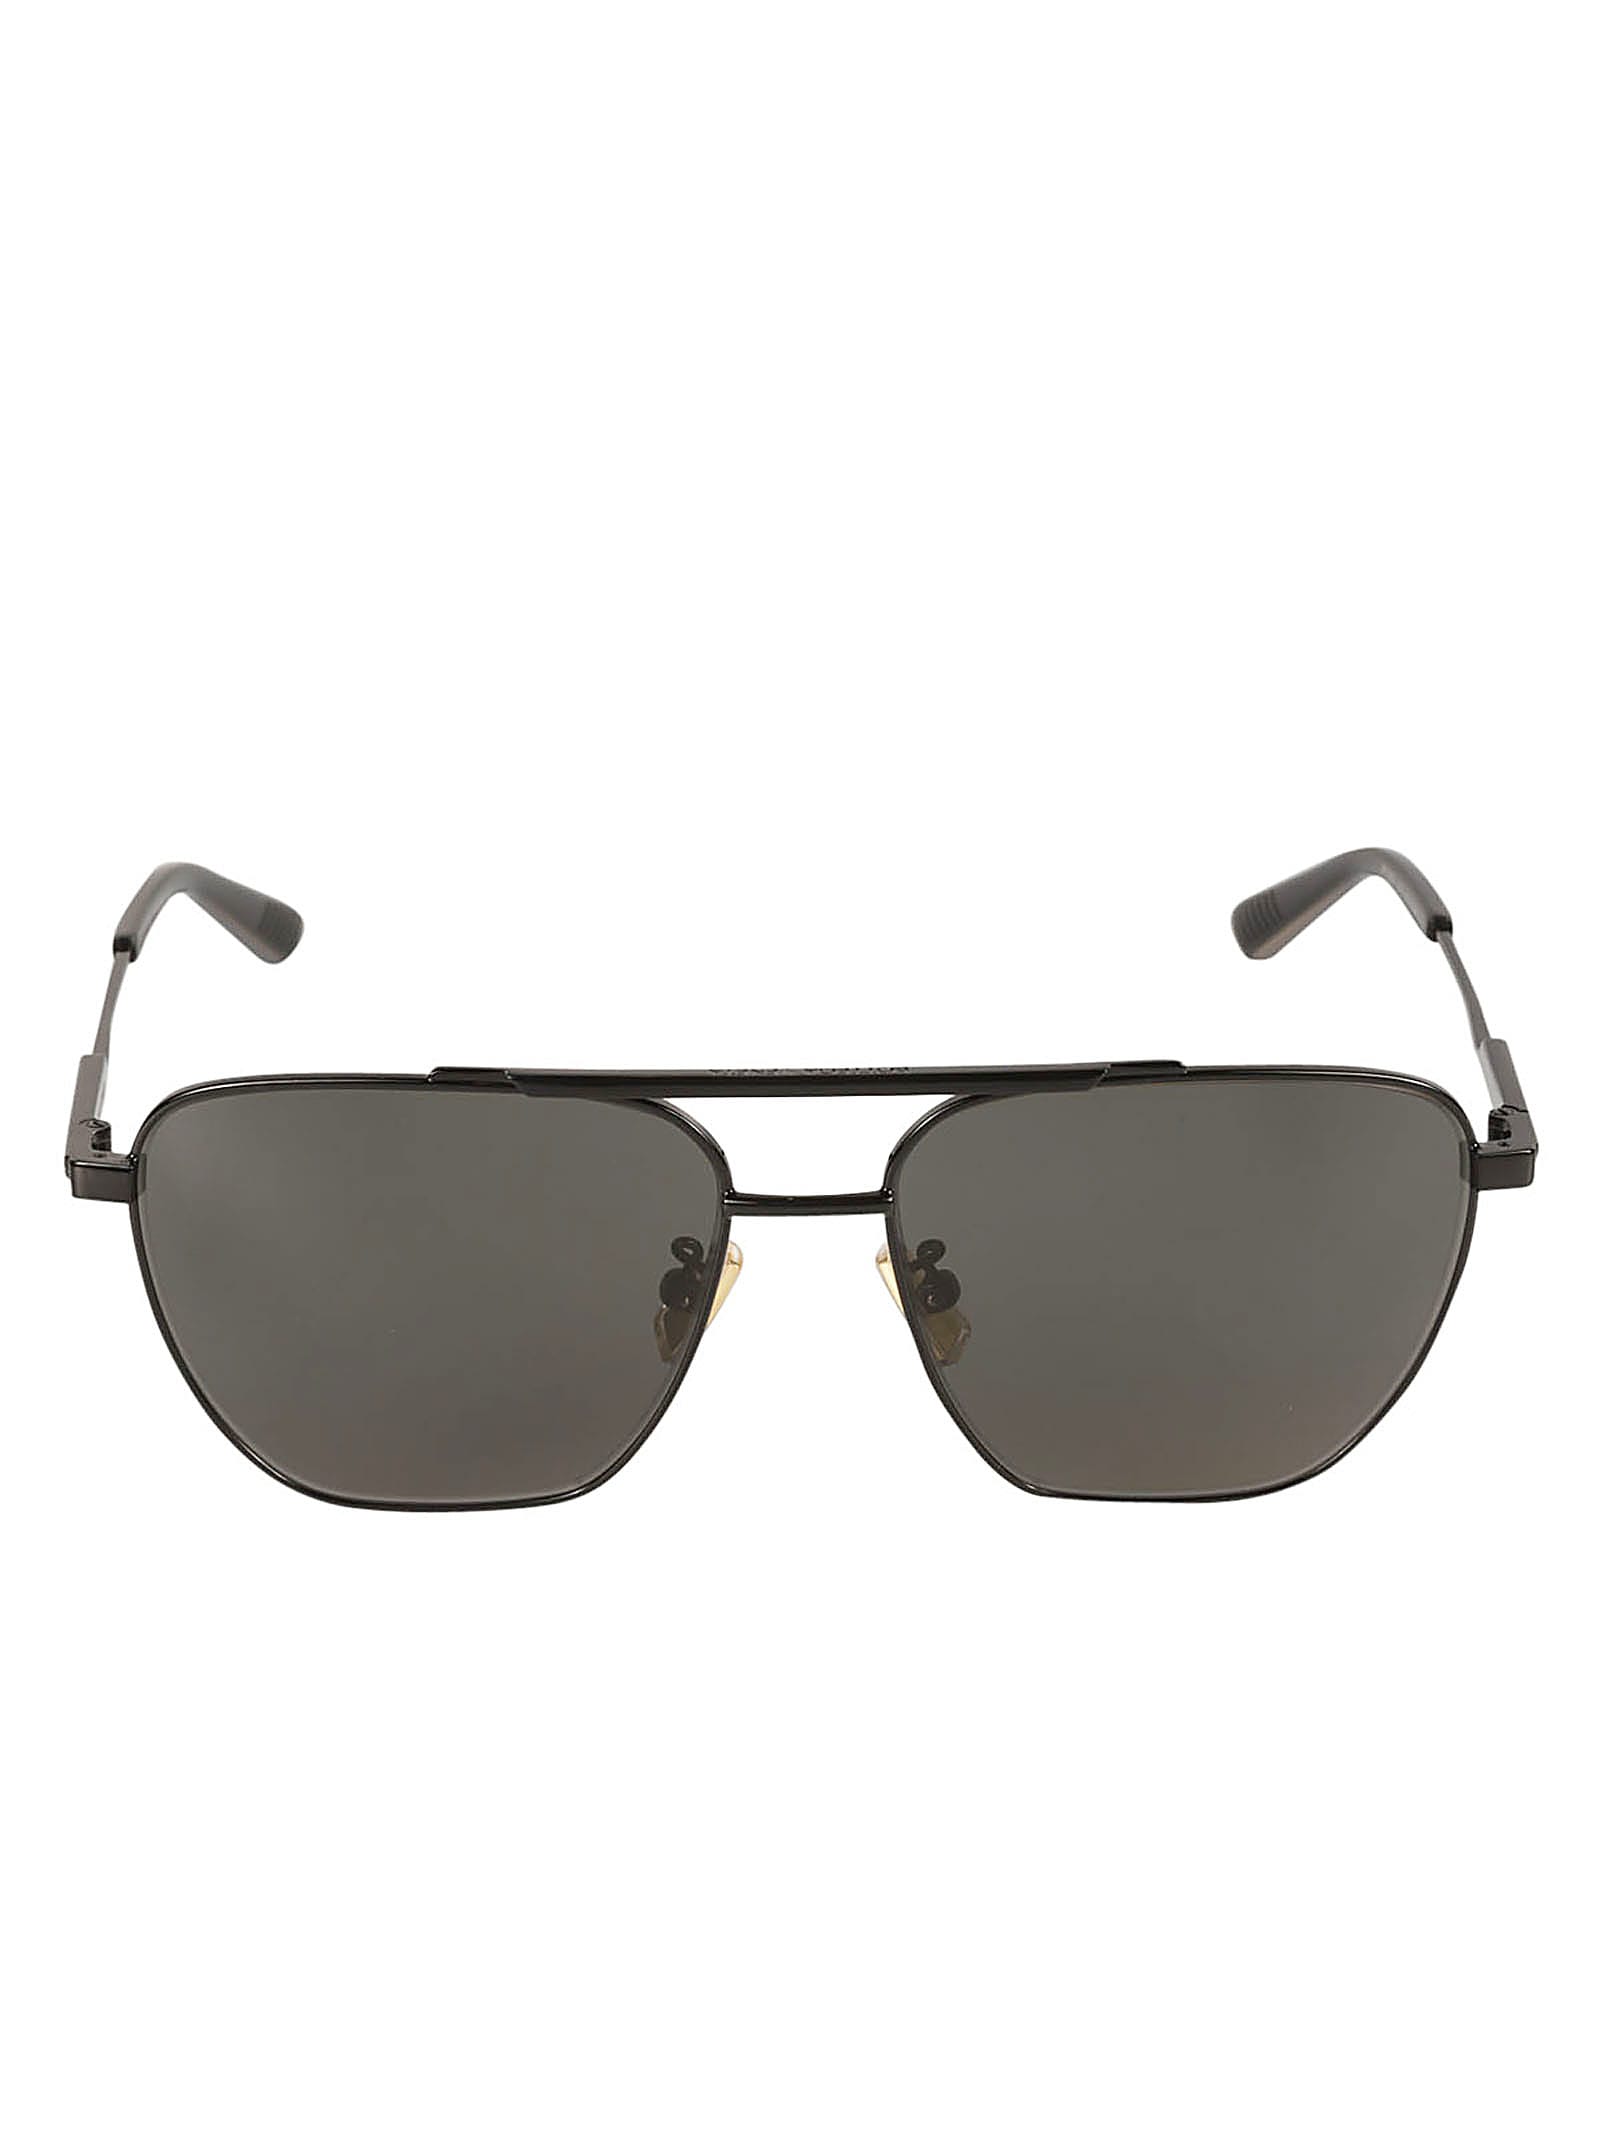 Bottega Veneta Aviator Style Sunglasses In Black/grey